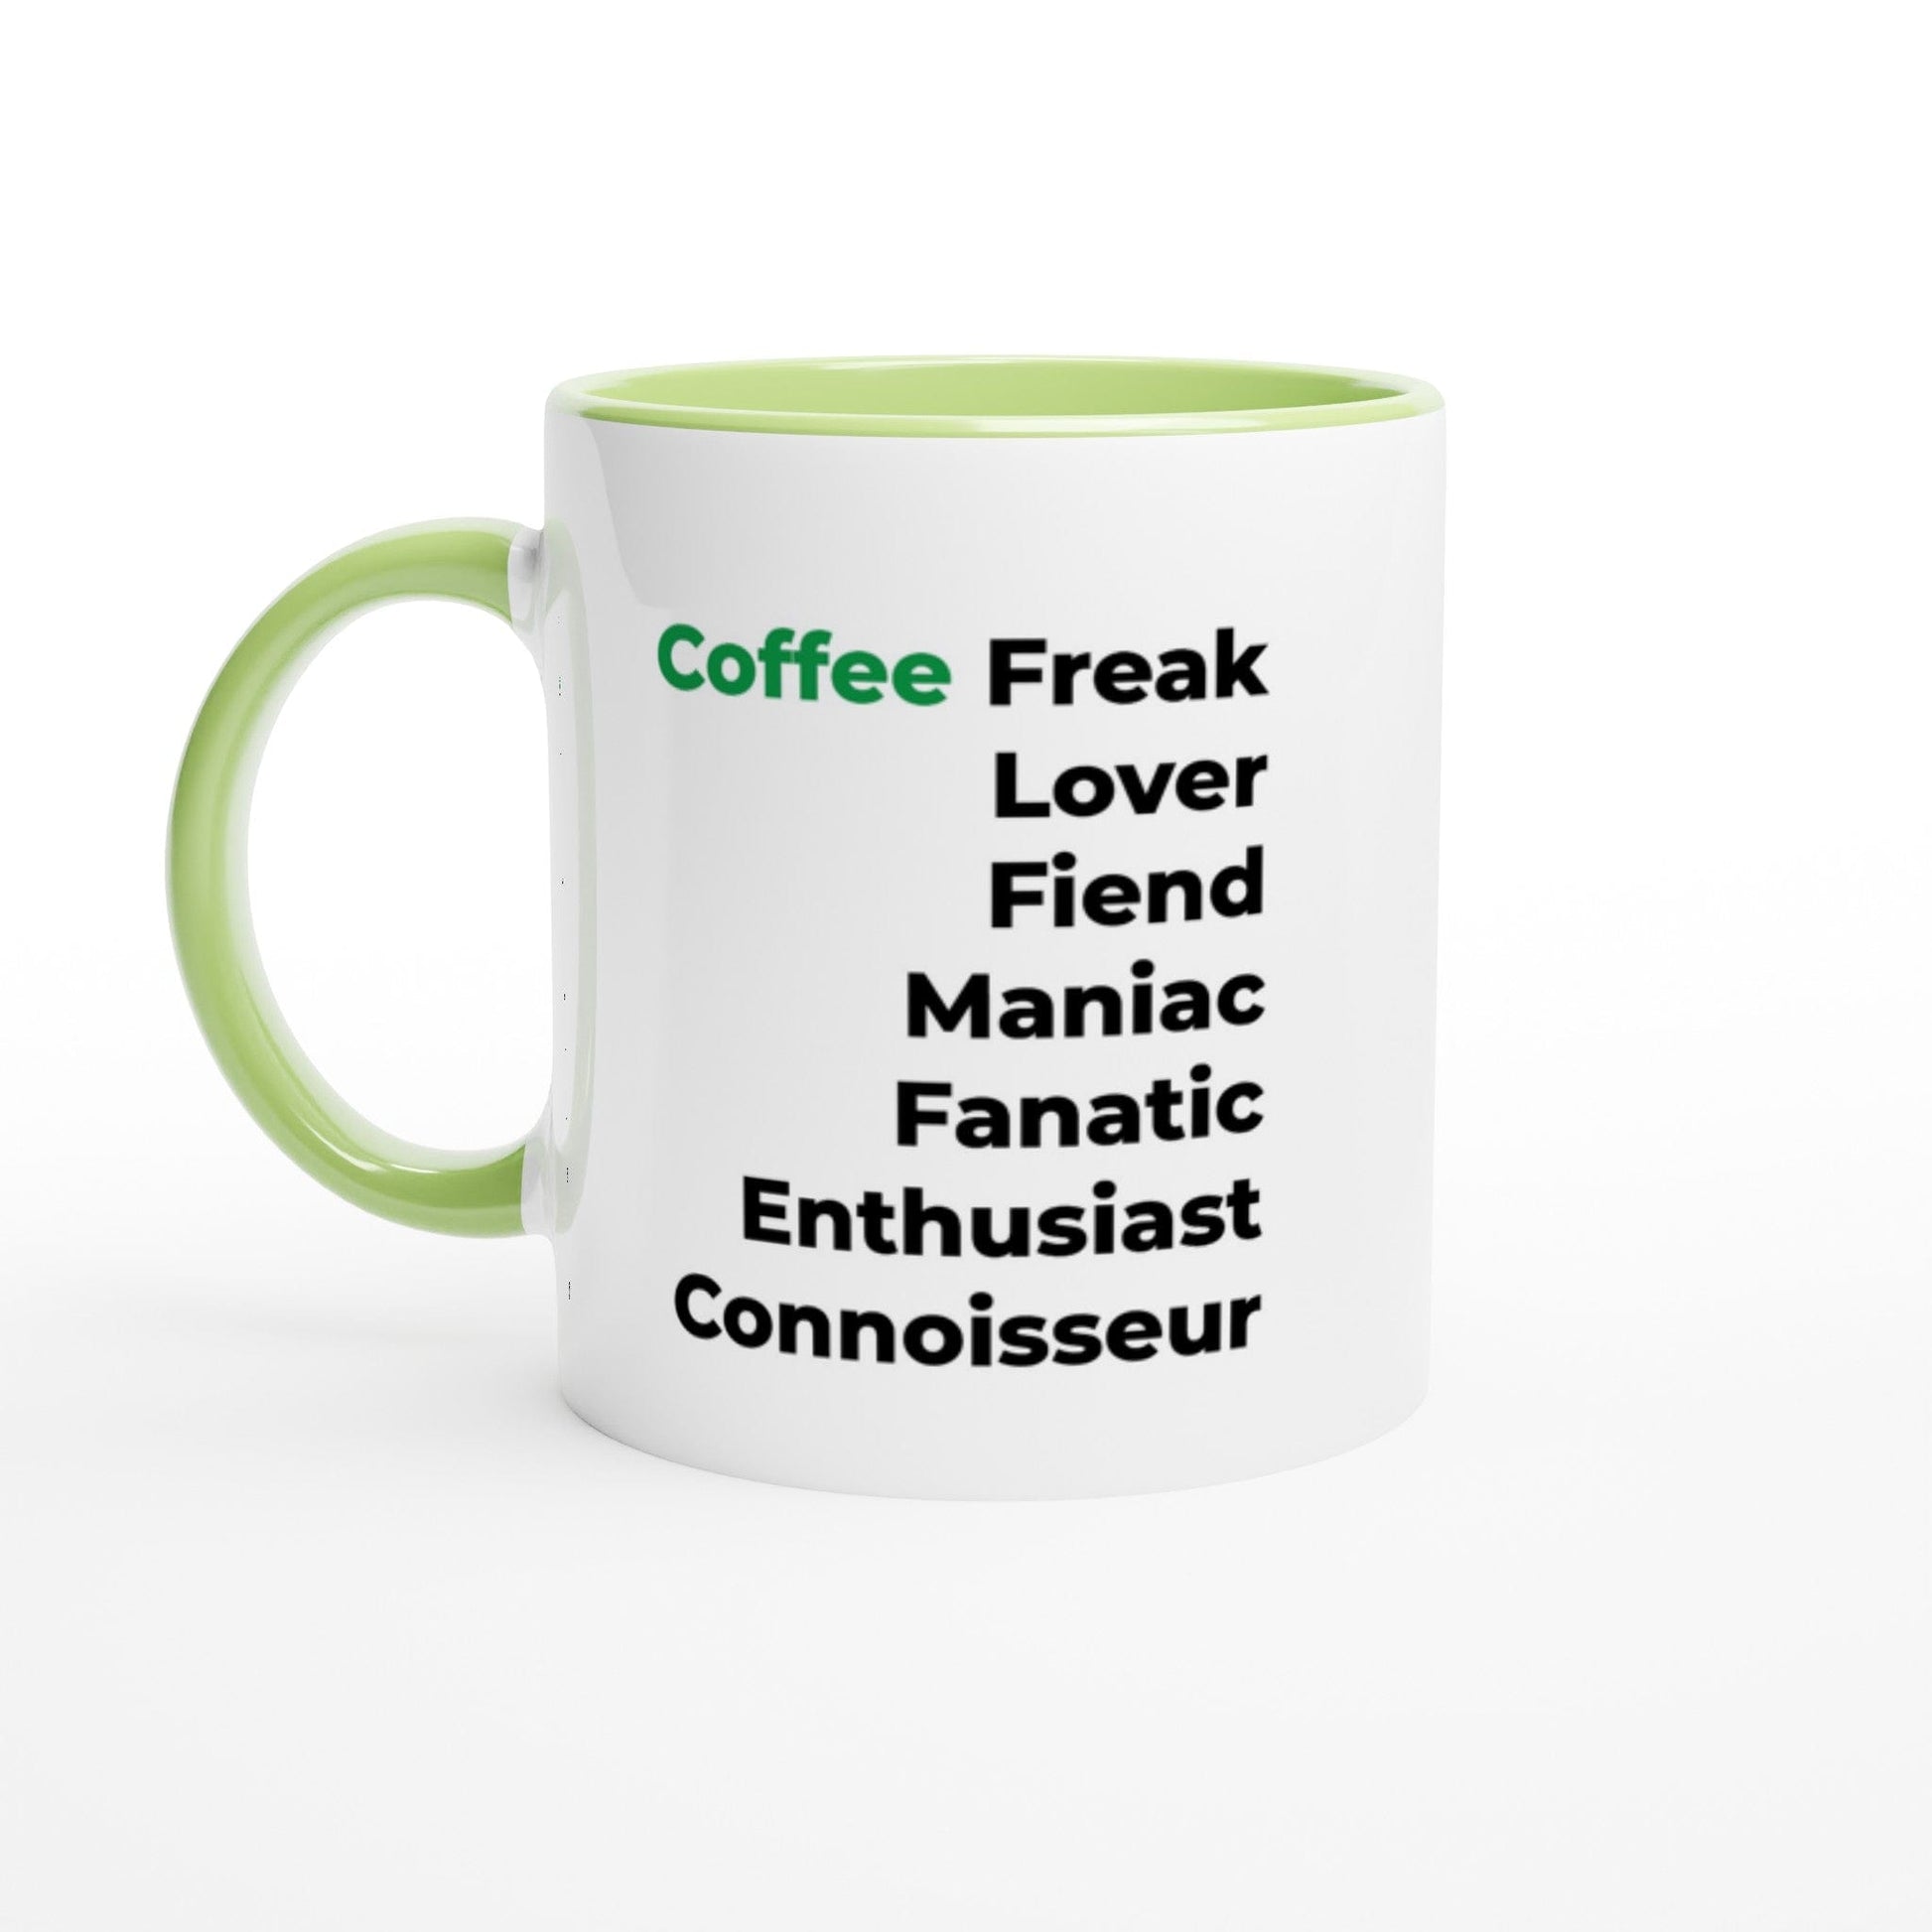 Good Bean Gifts "Coffee Freak" Two-Tone Coffee Mugs, 11oz Ceramic Green